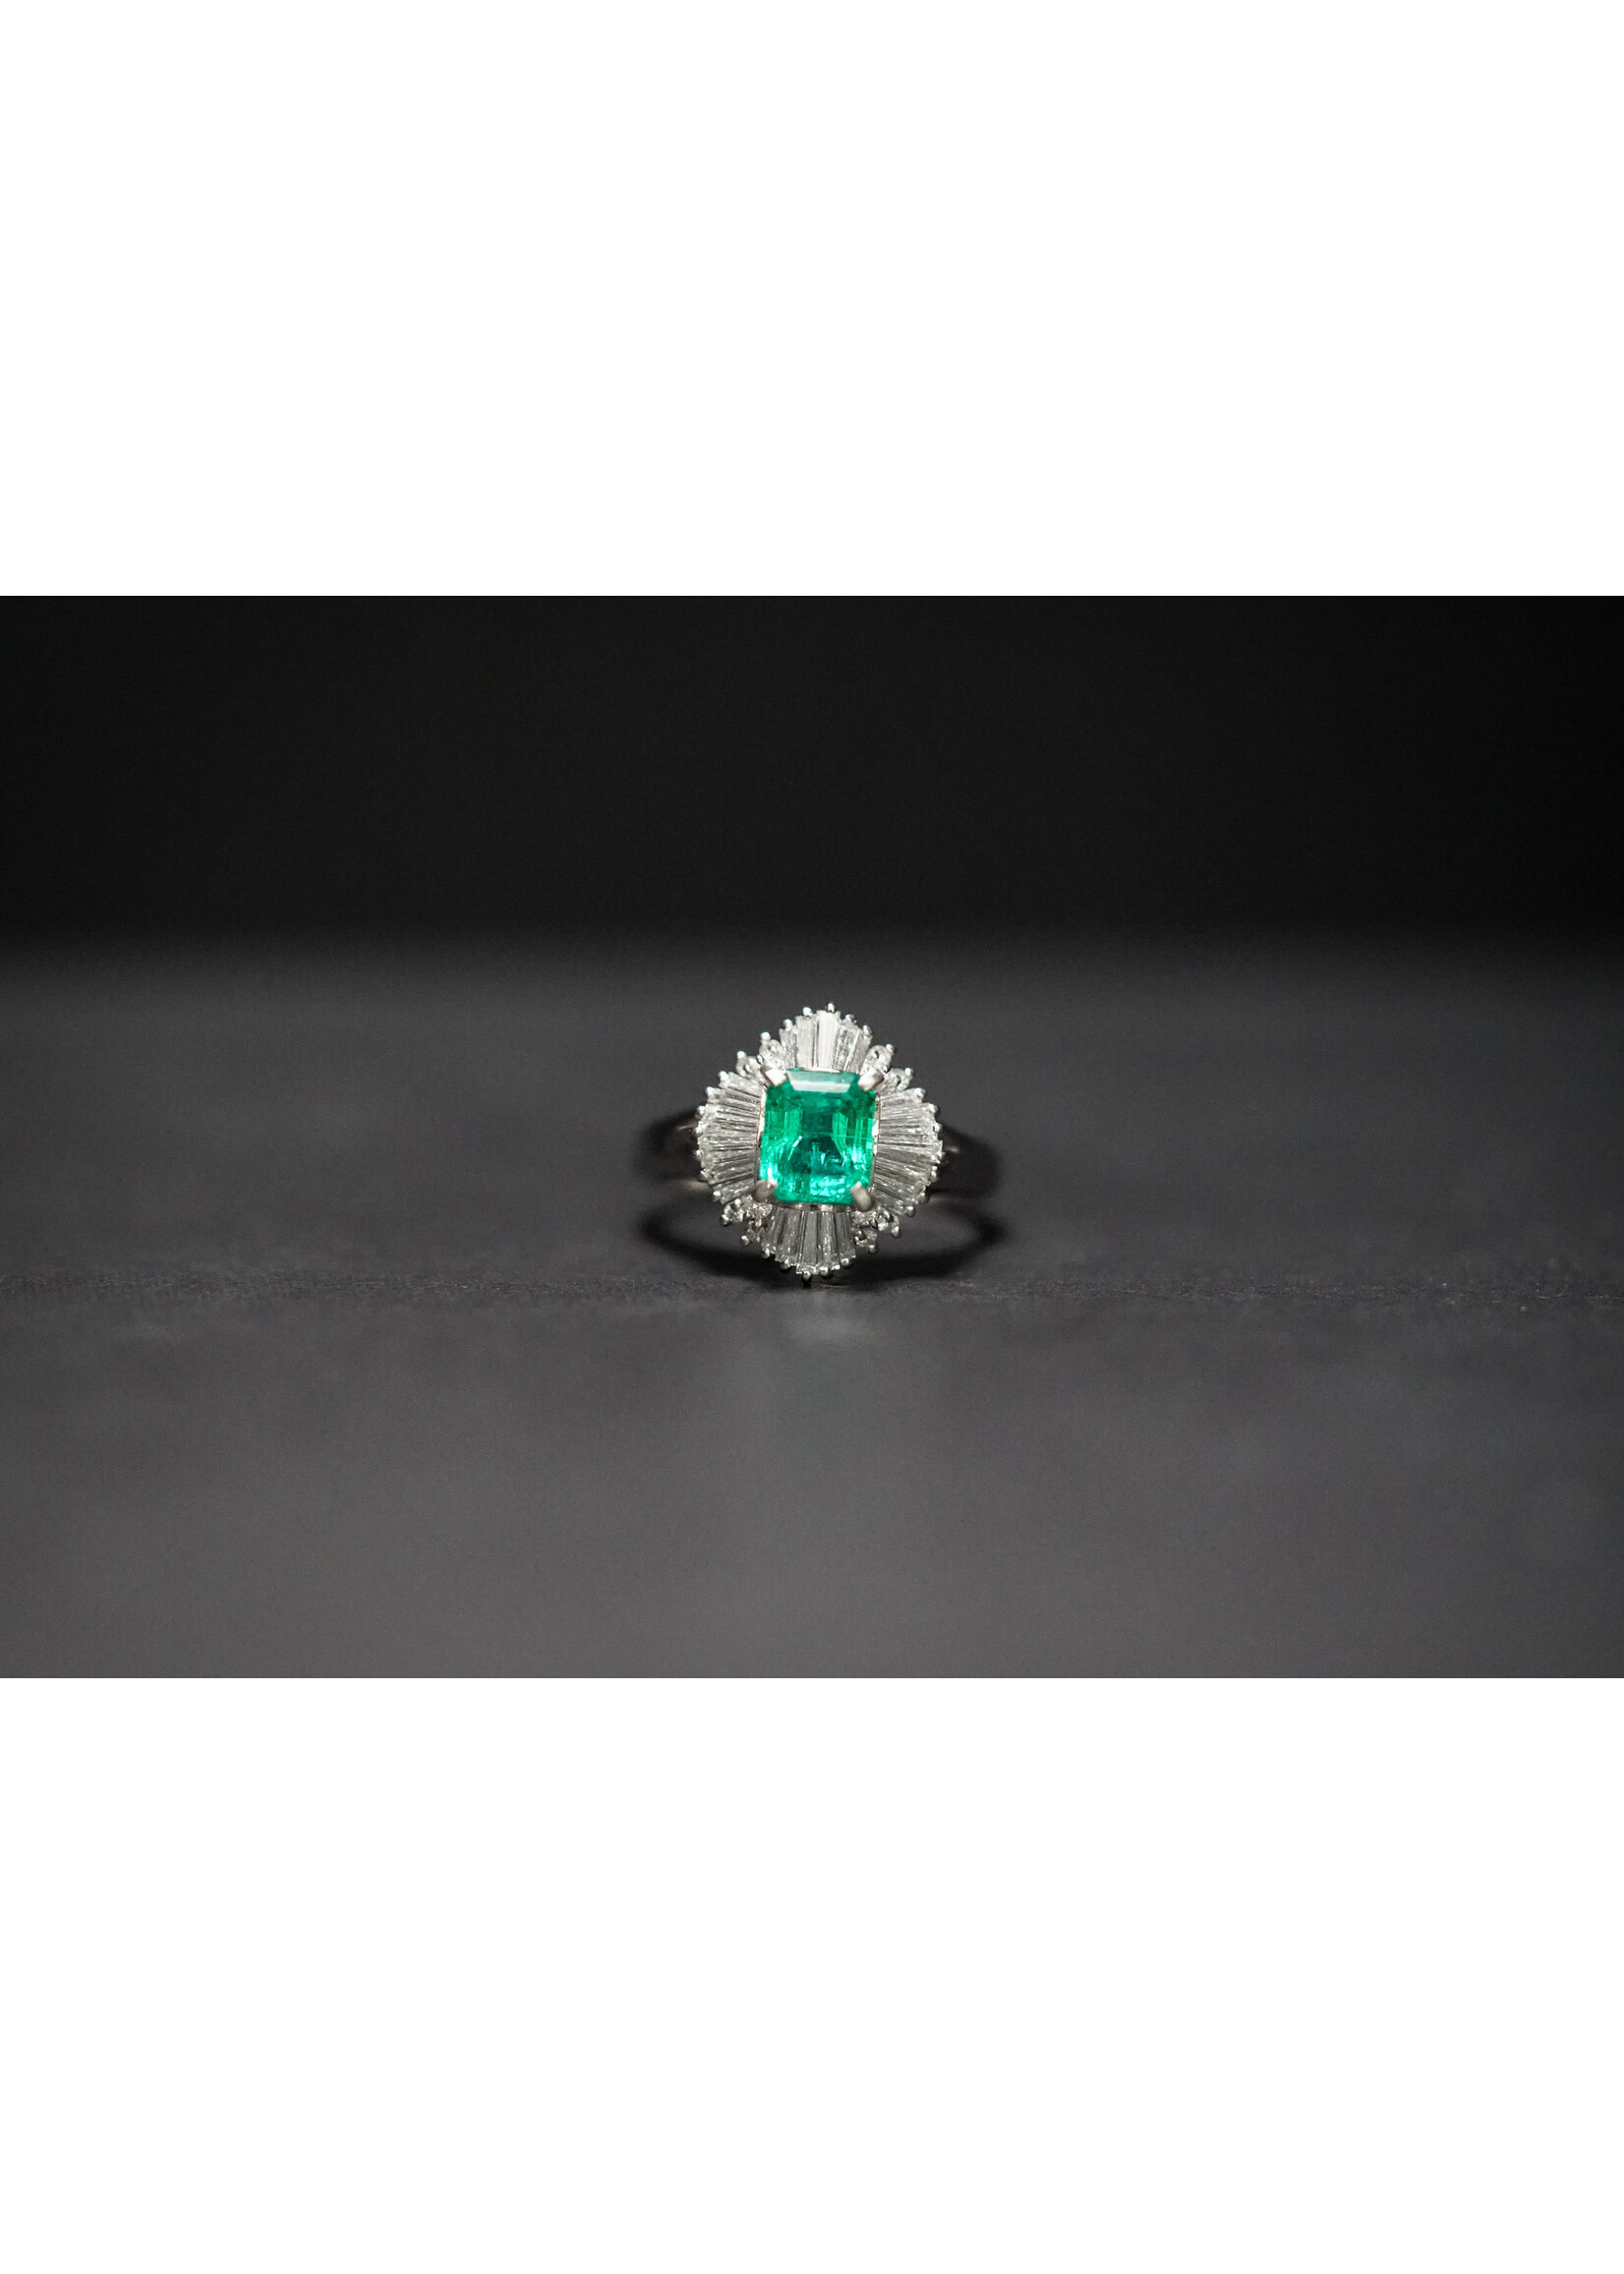 AATT-Platinum 8.4g 2.25ctw (1.40ctr) Emerald & Diamond Estate Ring (size 8.25)